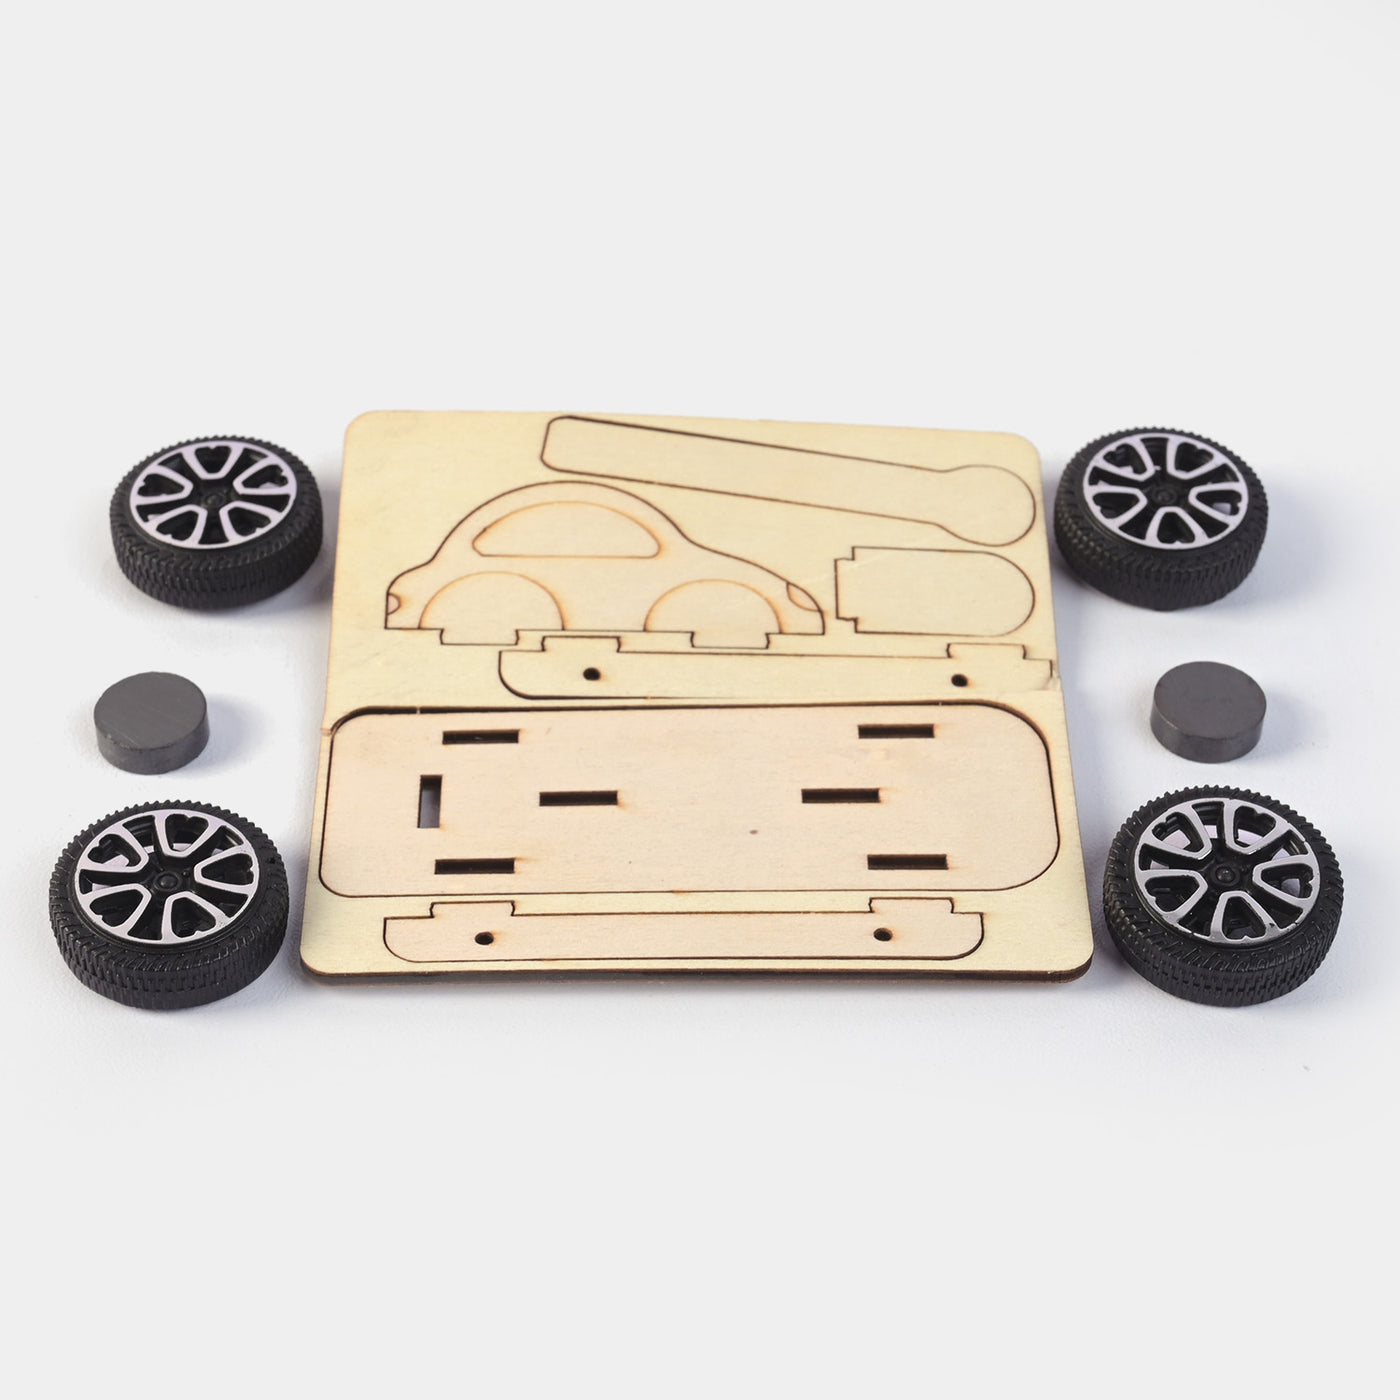 DIY Magnet Vehicle Toy For Kids